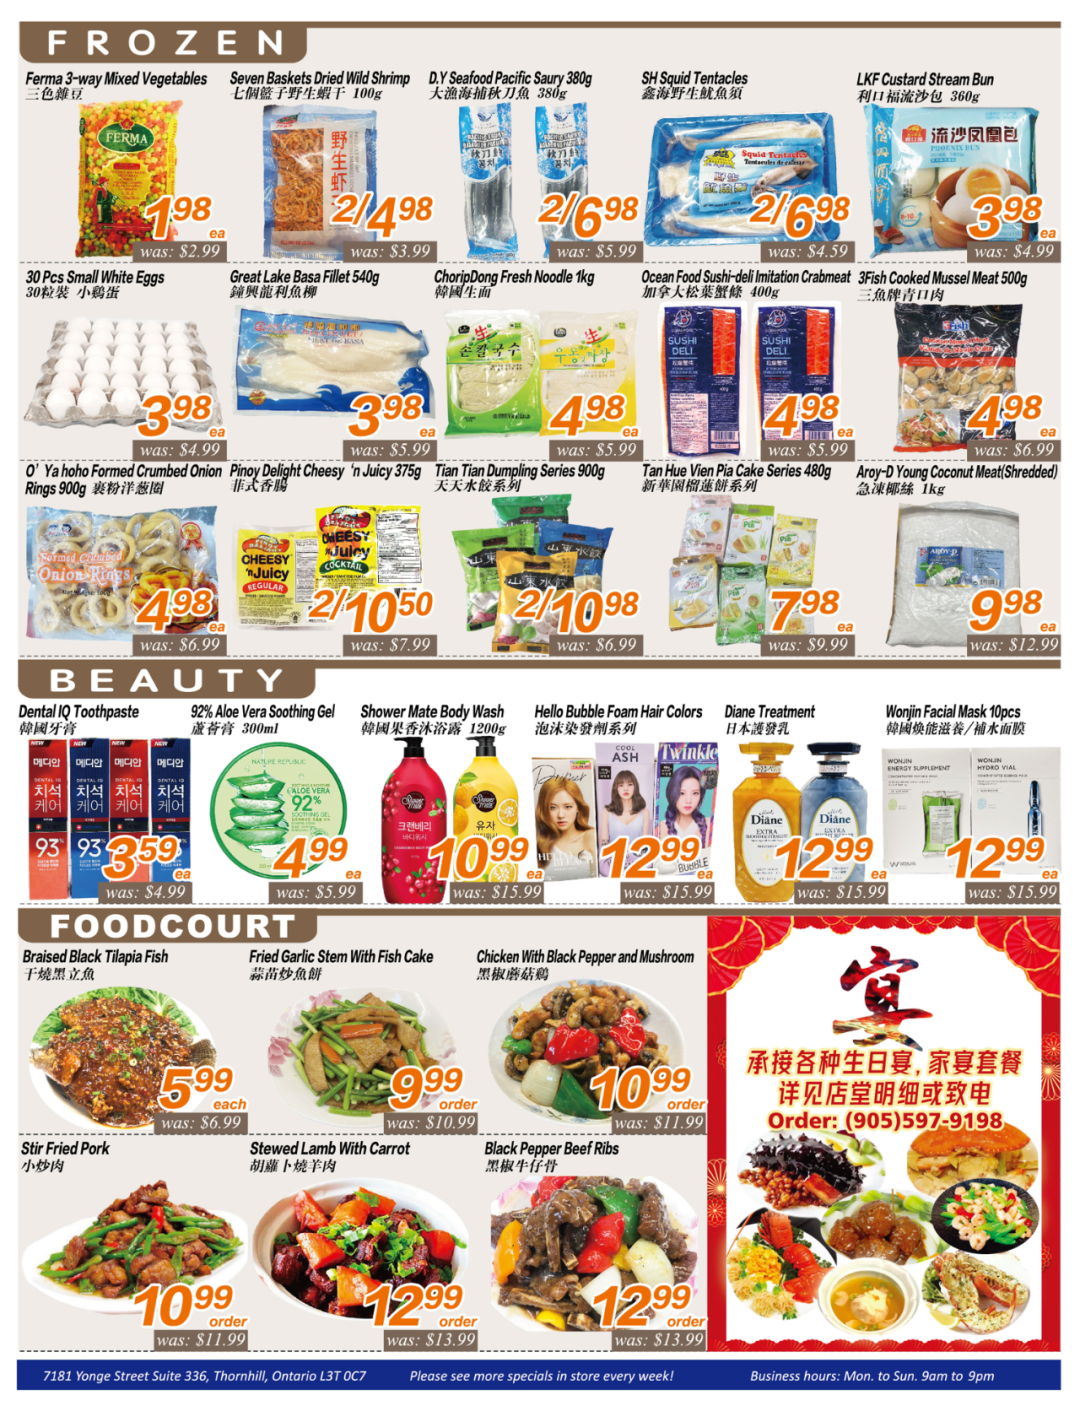 佳乐超市 Seasons Foodmart Flyer 2023年4月7日--4月13日特价商品